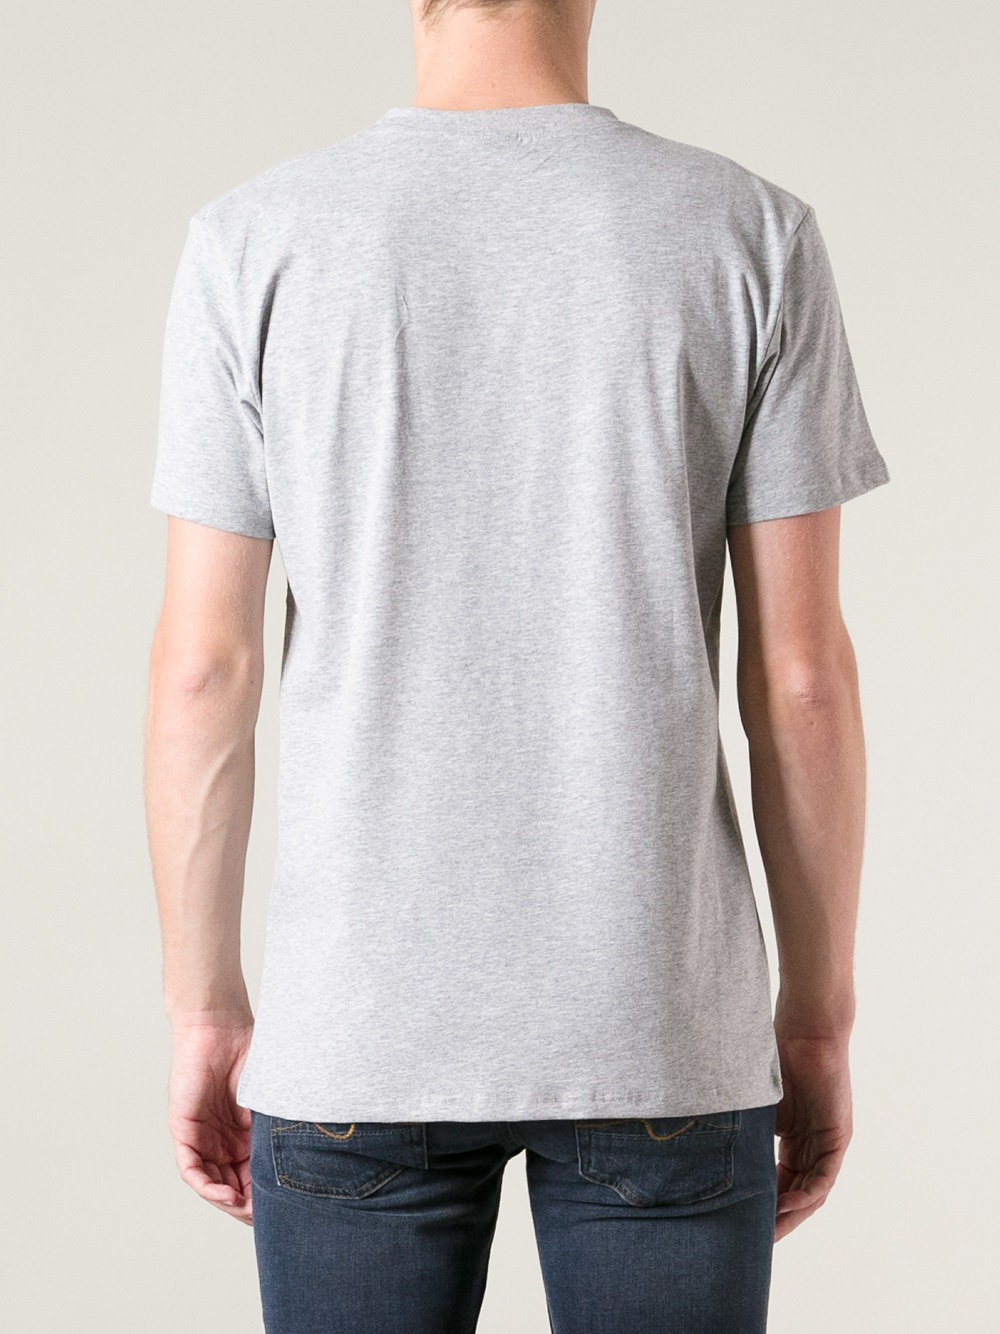 Lyst - Marcelo Burlon Printed Tshirt in Gray for Men